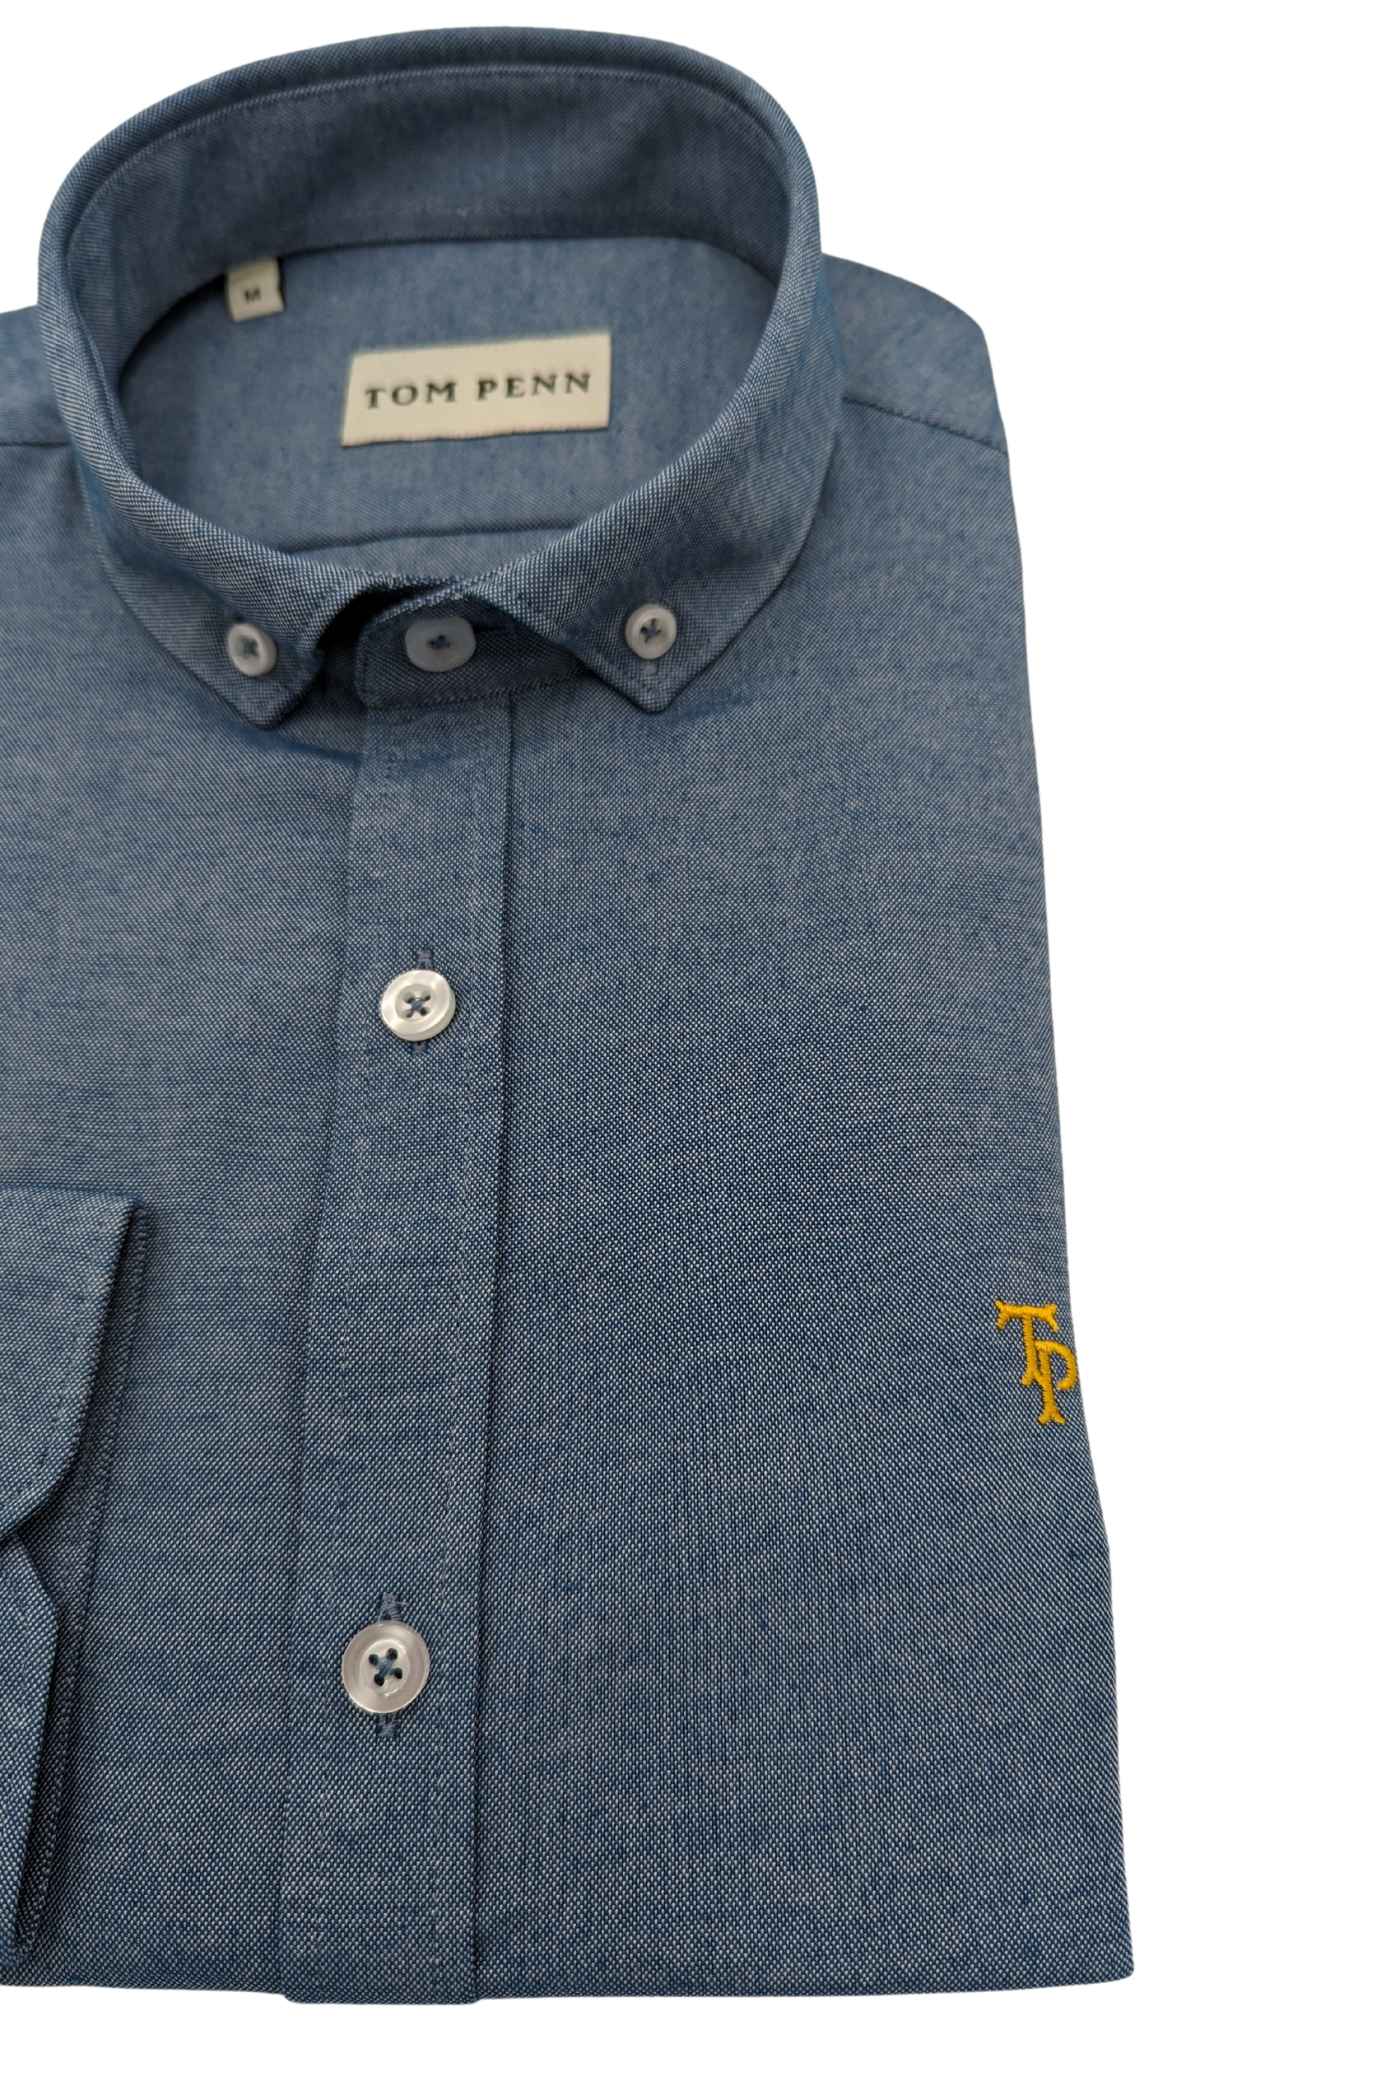 Tom Penn Slim fit Button Down Aqua Shirt-Detail view